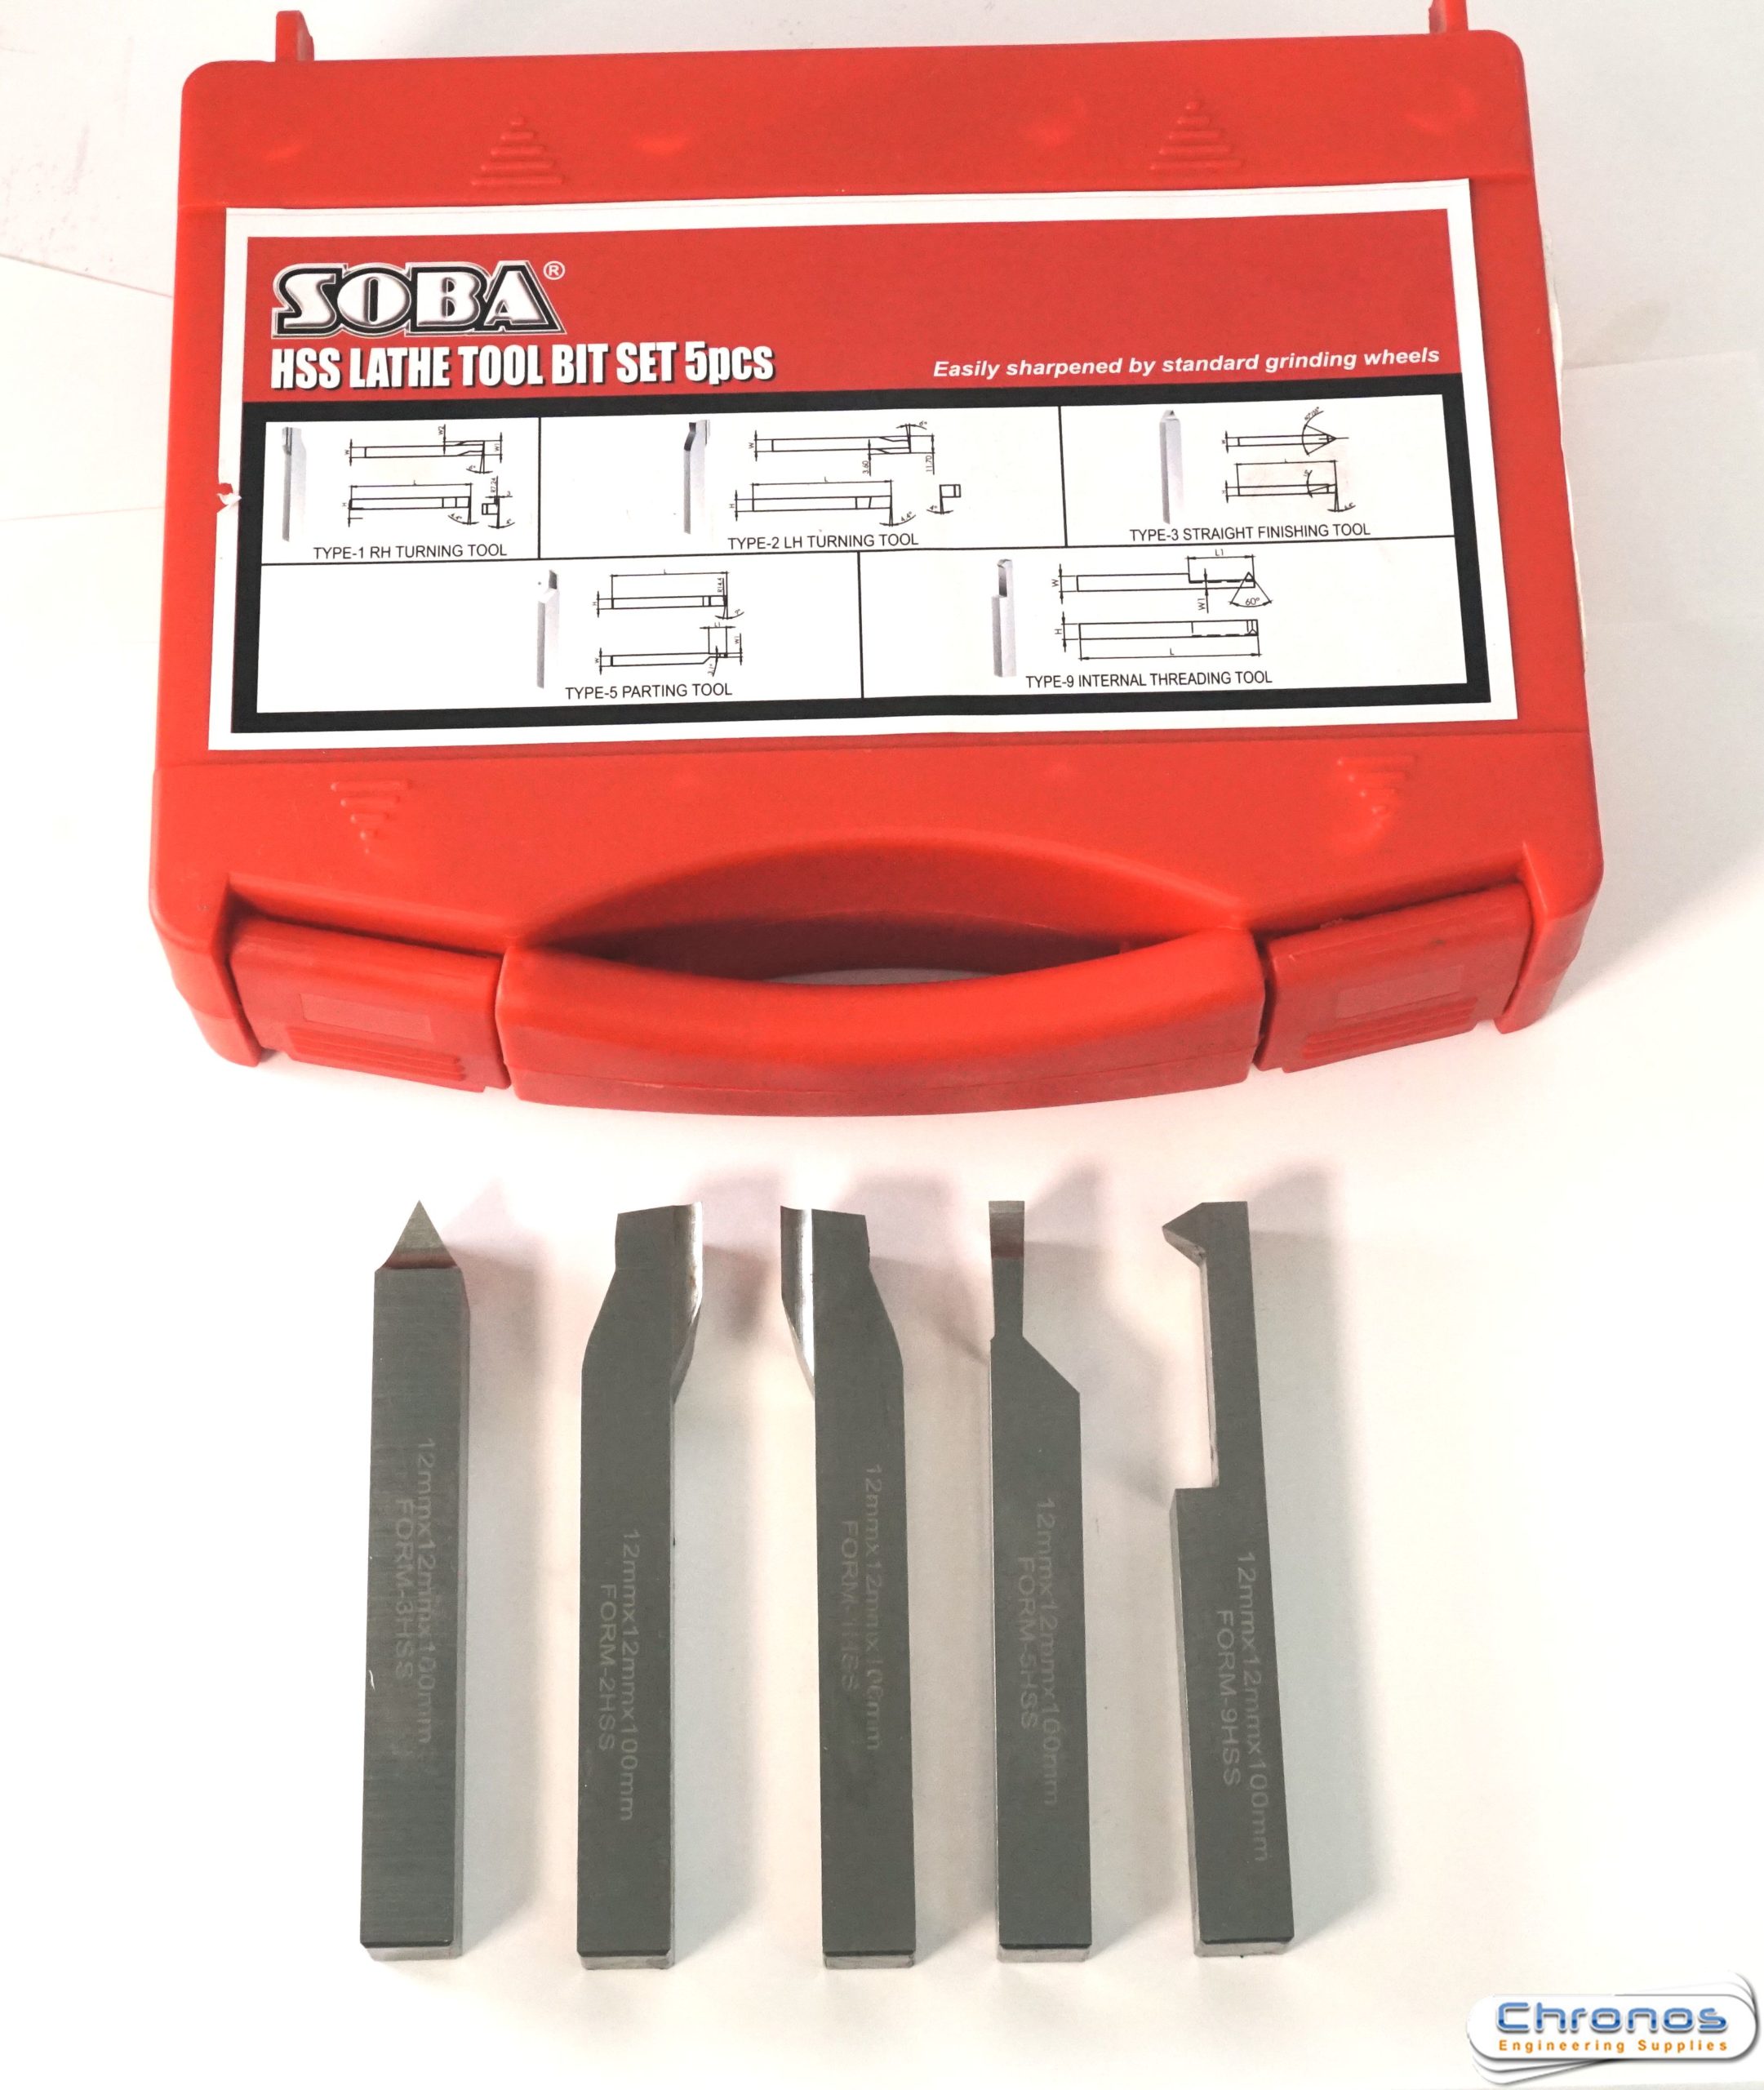 Set of 5 Soba HSS Lathe Tools 12 mm Square Ref: 131064 Turning 